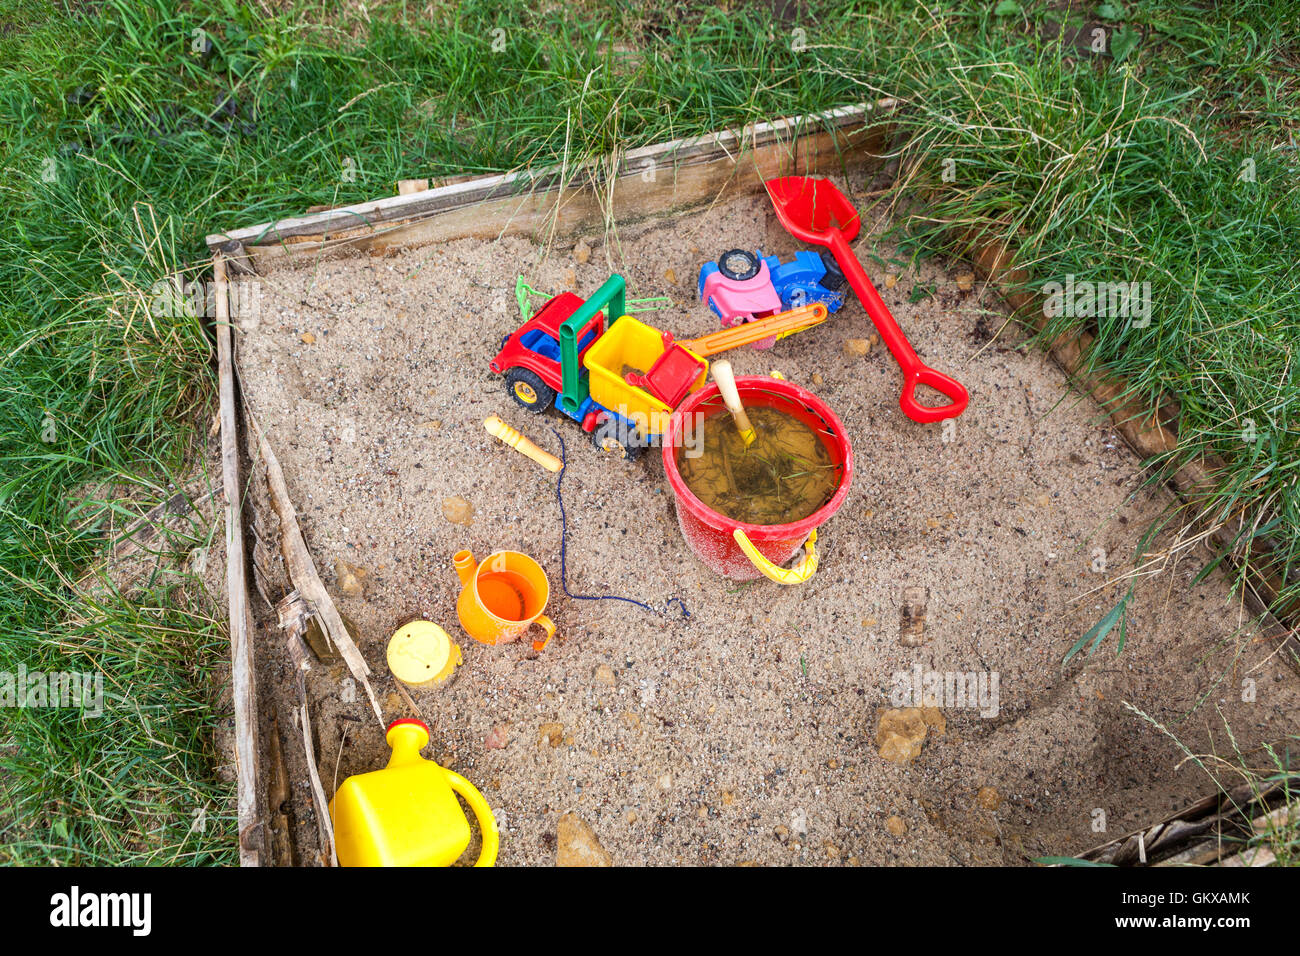 Children playground toys in a sandpit Stock Photo